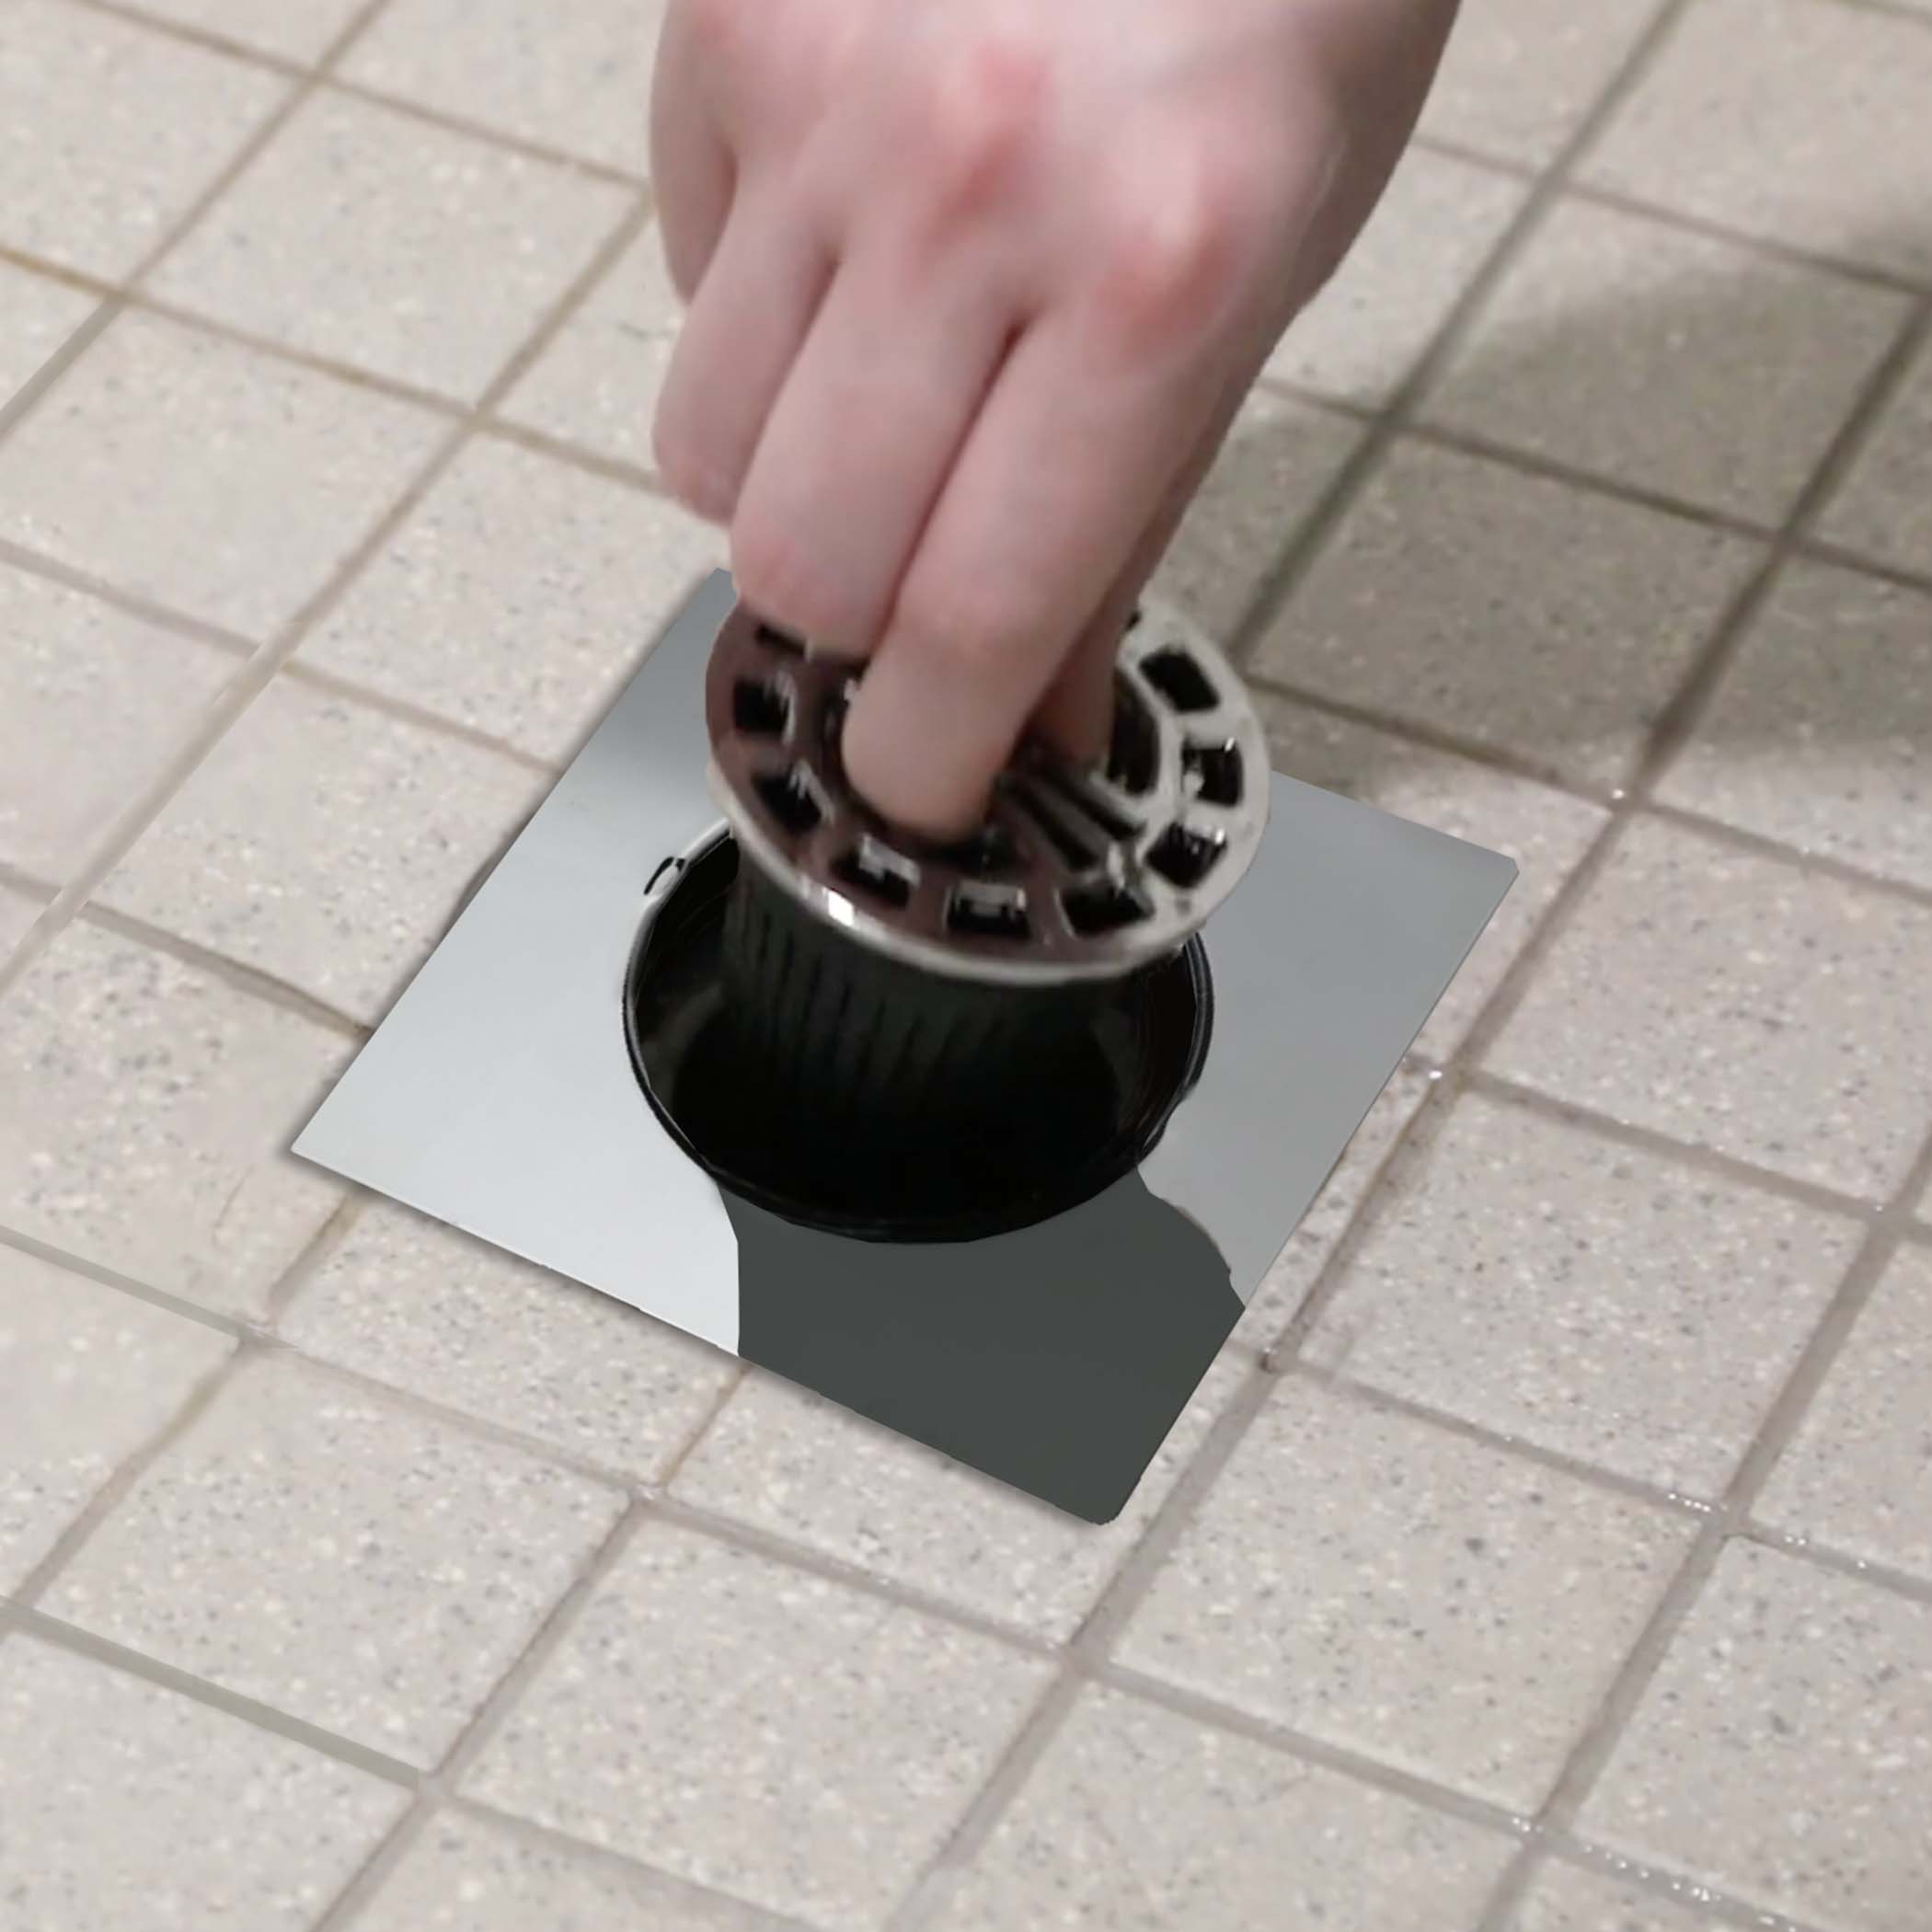 Hair-trap drain in tile shower! 